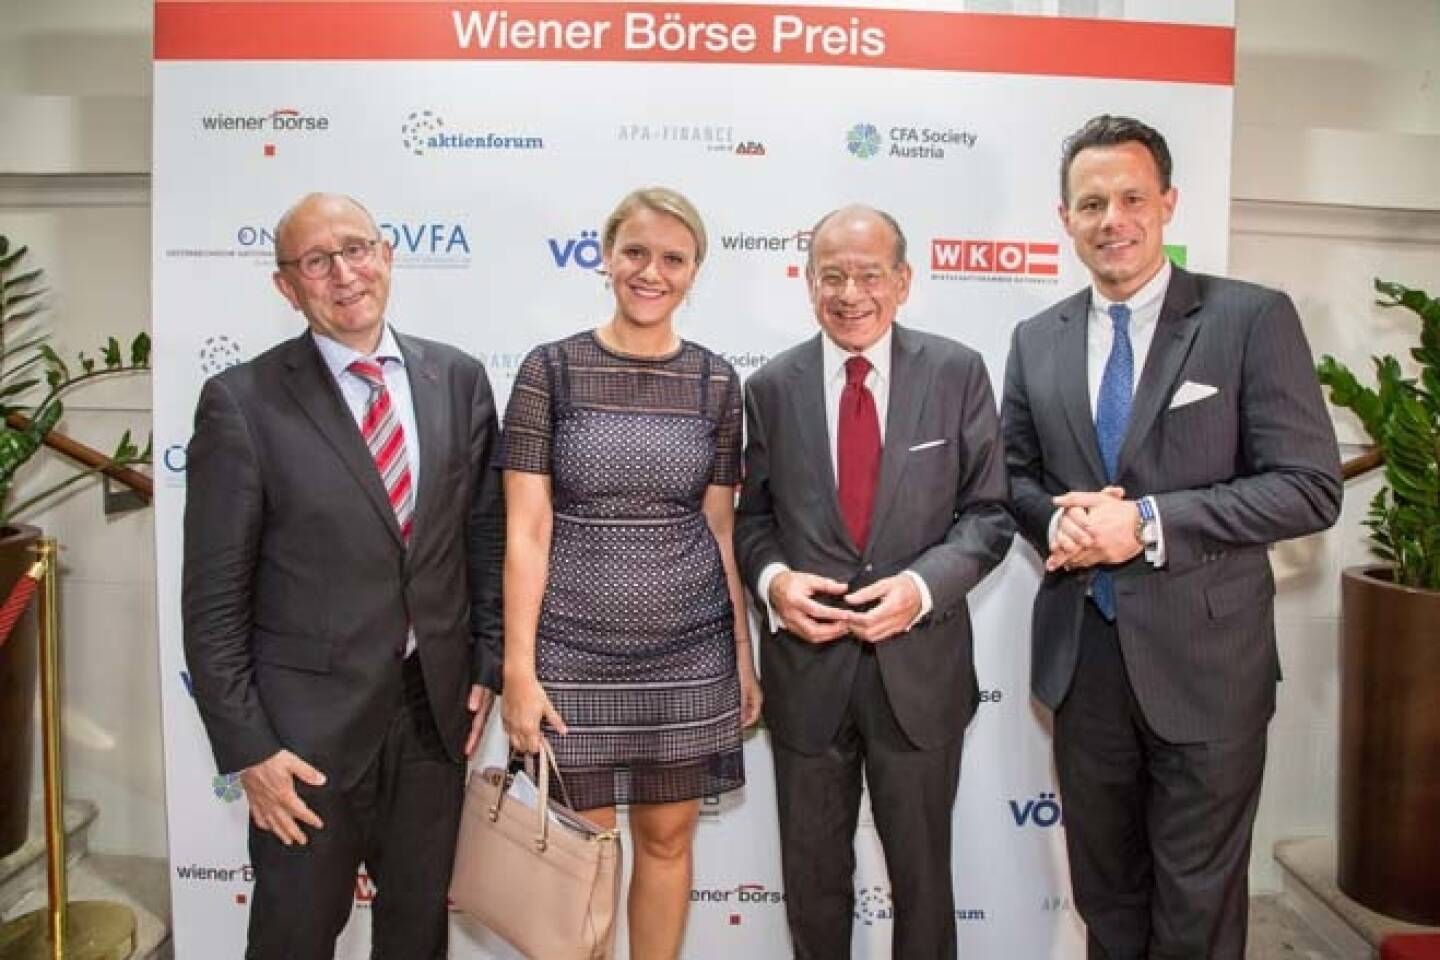 Wiener Börse-Vorstand Ludwig Nießen, Michael Spiess (Raiffeisen Capital Management), Börse-CEO Christoph Boschan; Credit: APA-Fotoservice